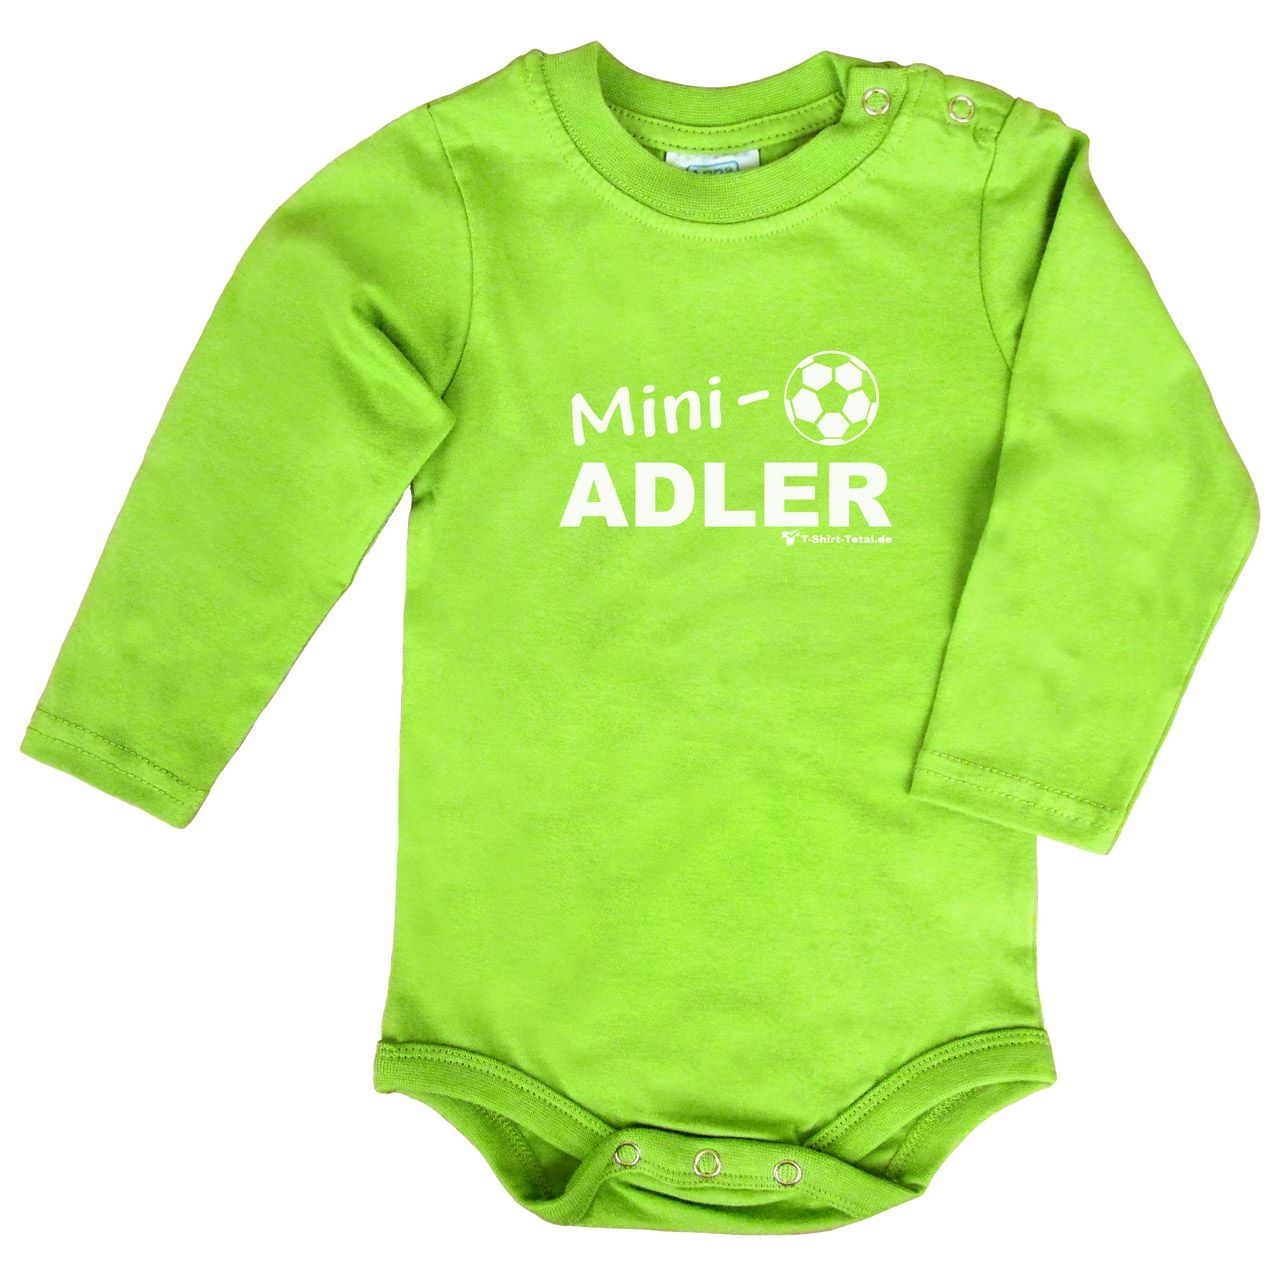 Mini Adler Baby Body Kurzarm hellgrün 56 / 62